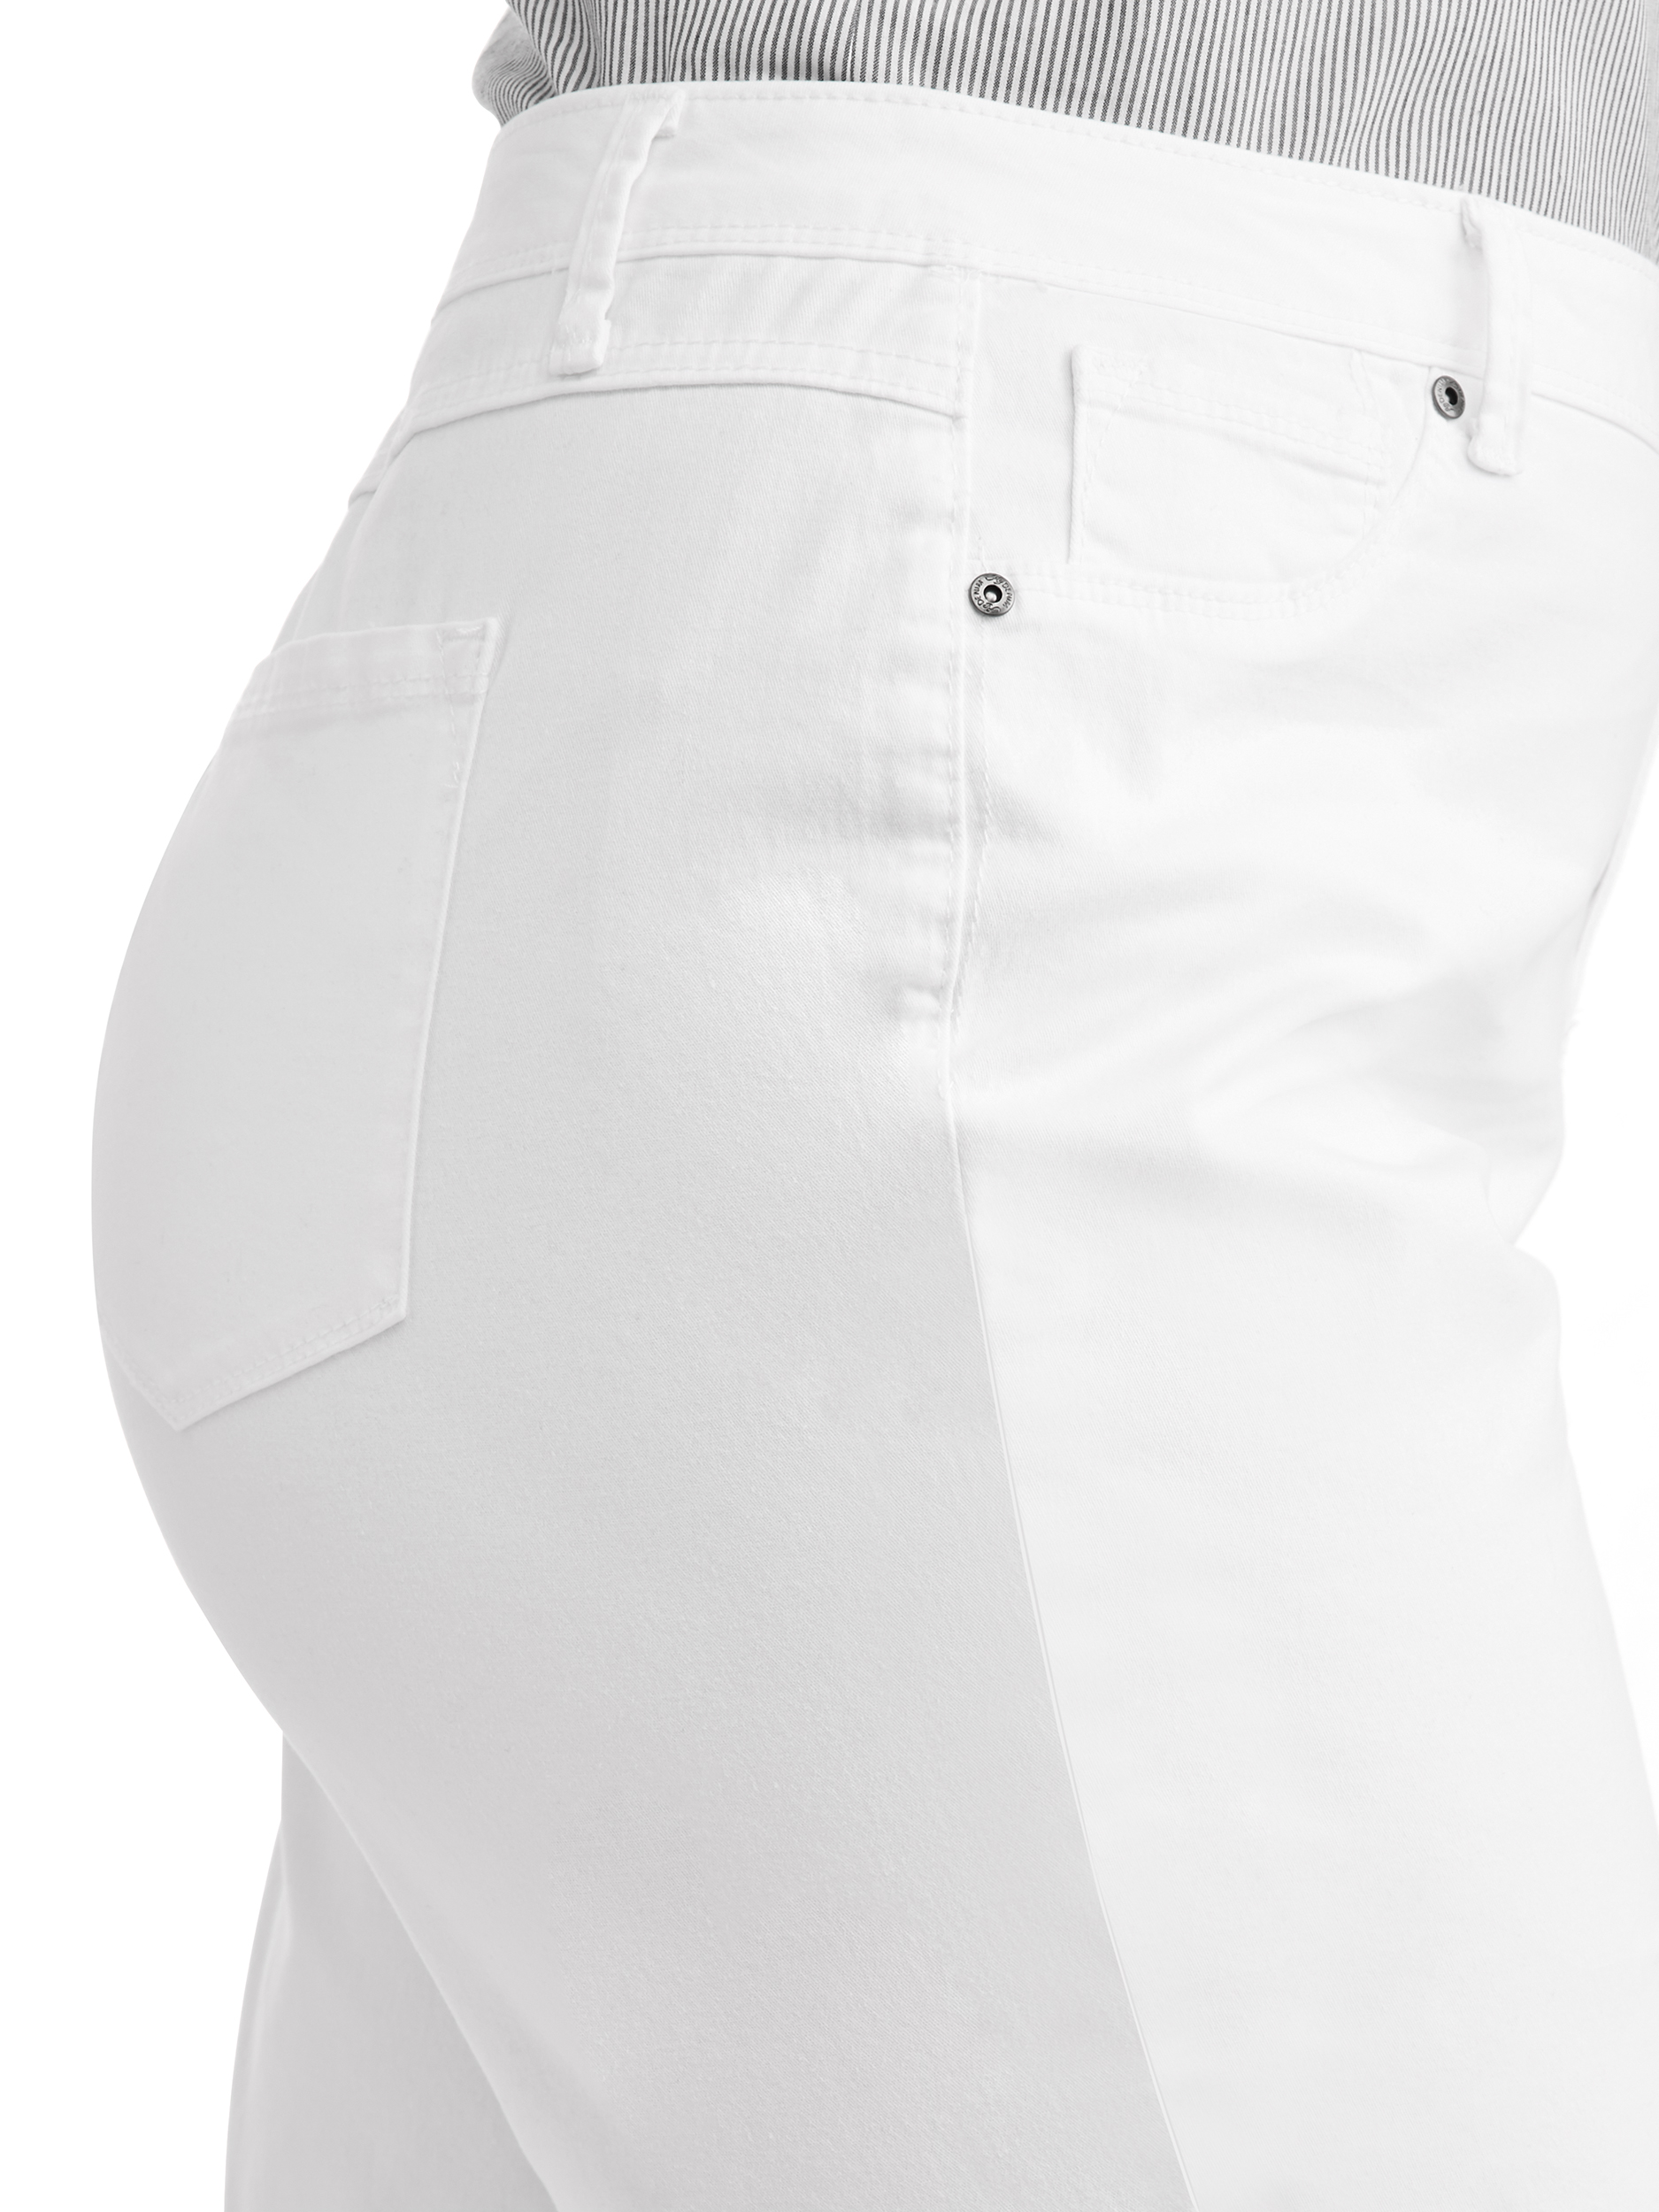 A3 Denim Women's Plus Size Basic Bermuda Shorts, Sizes 16-26 - Walmart.com